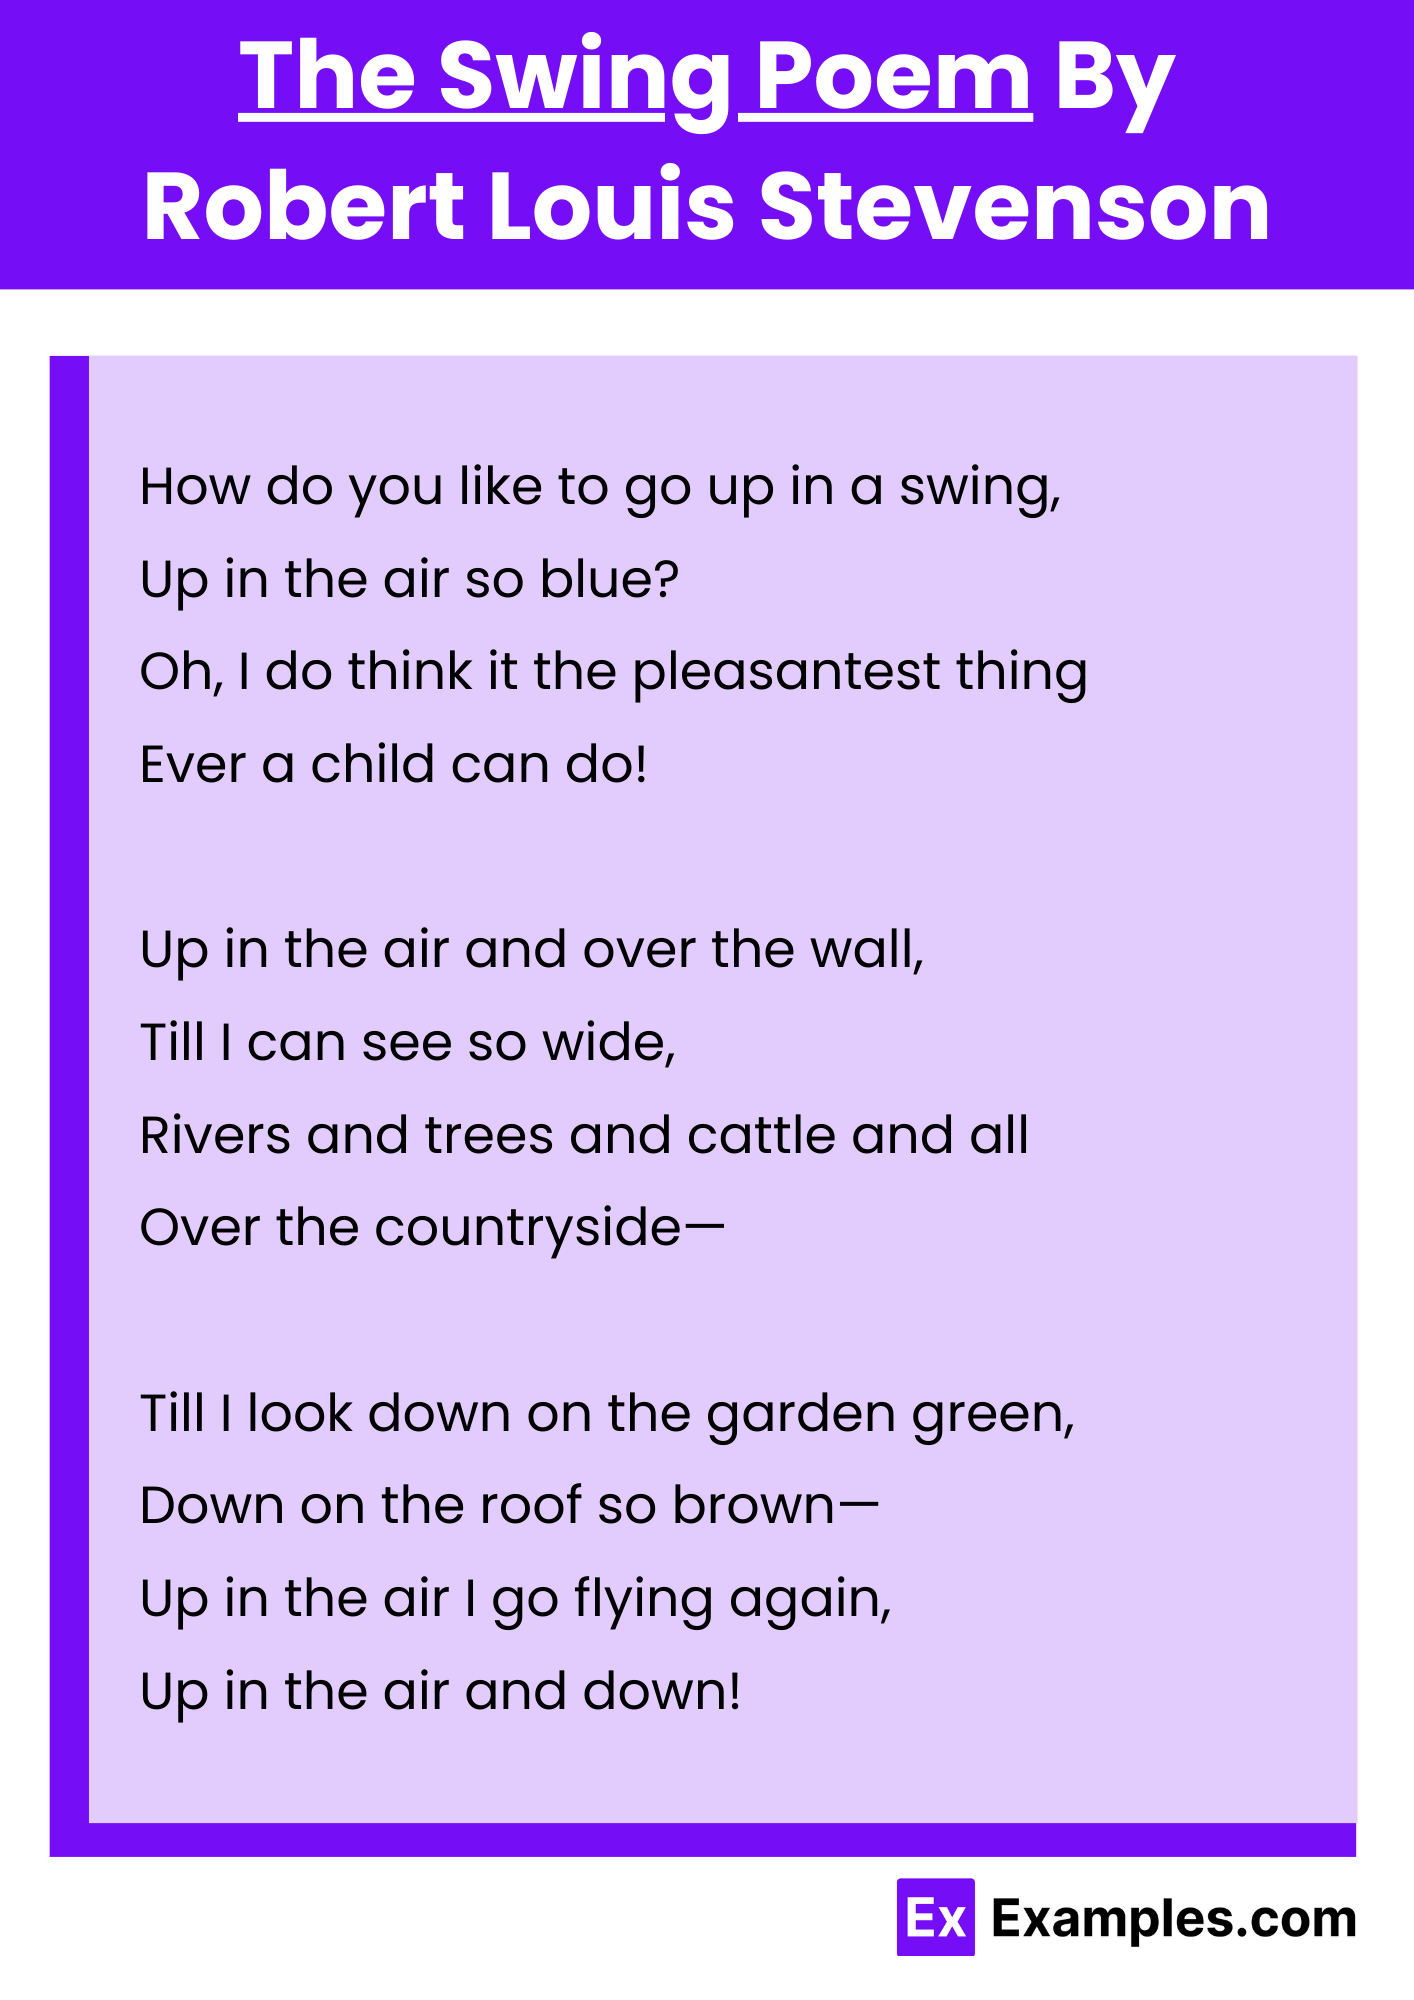 The Swing Poem By Robert Louis Stevenson